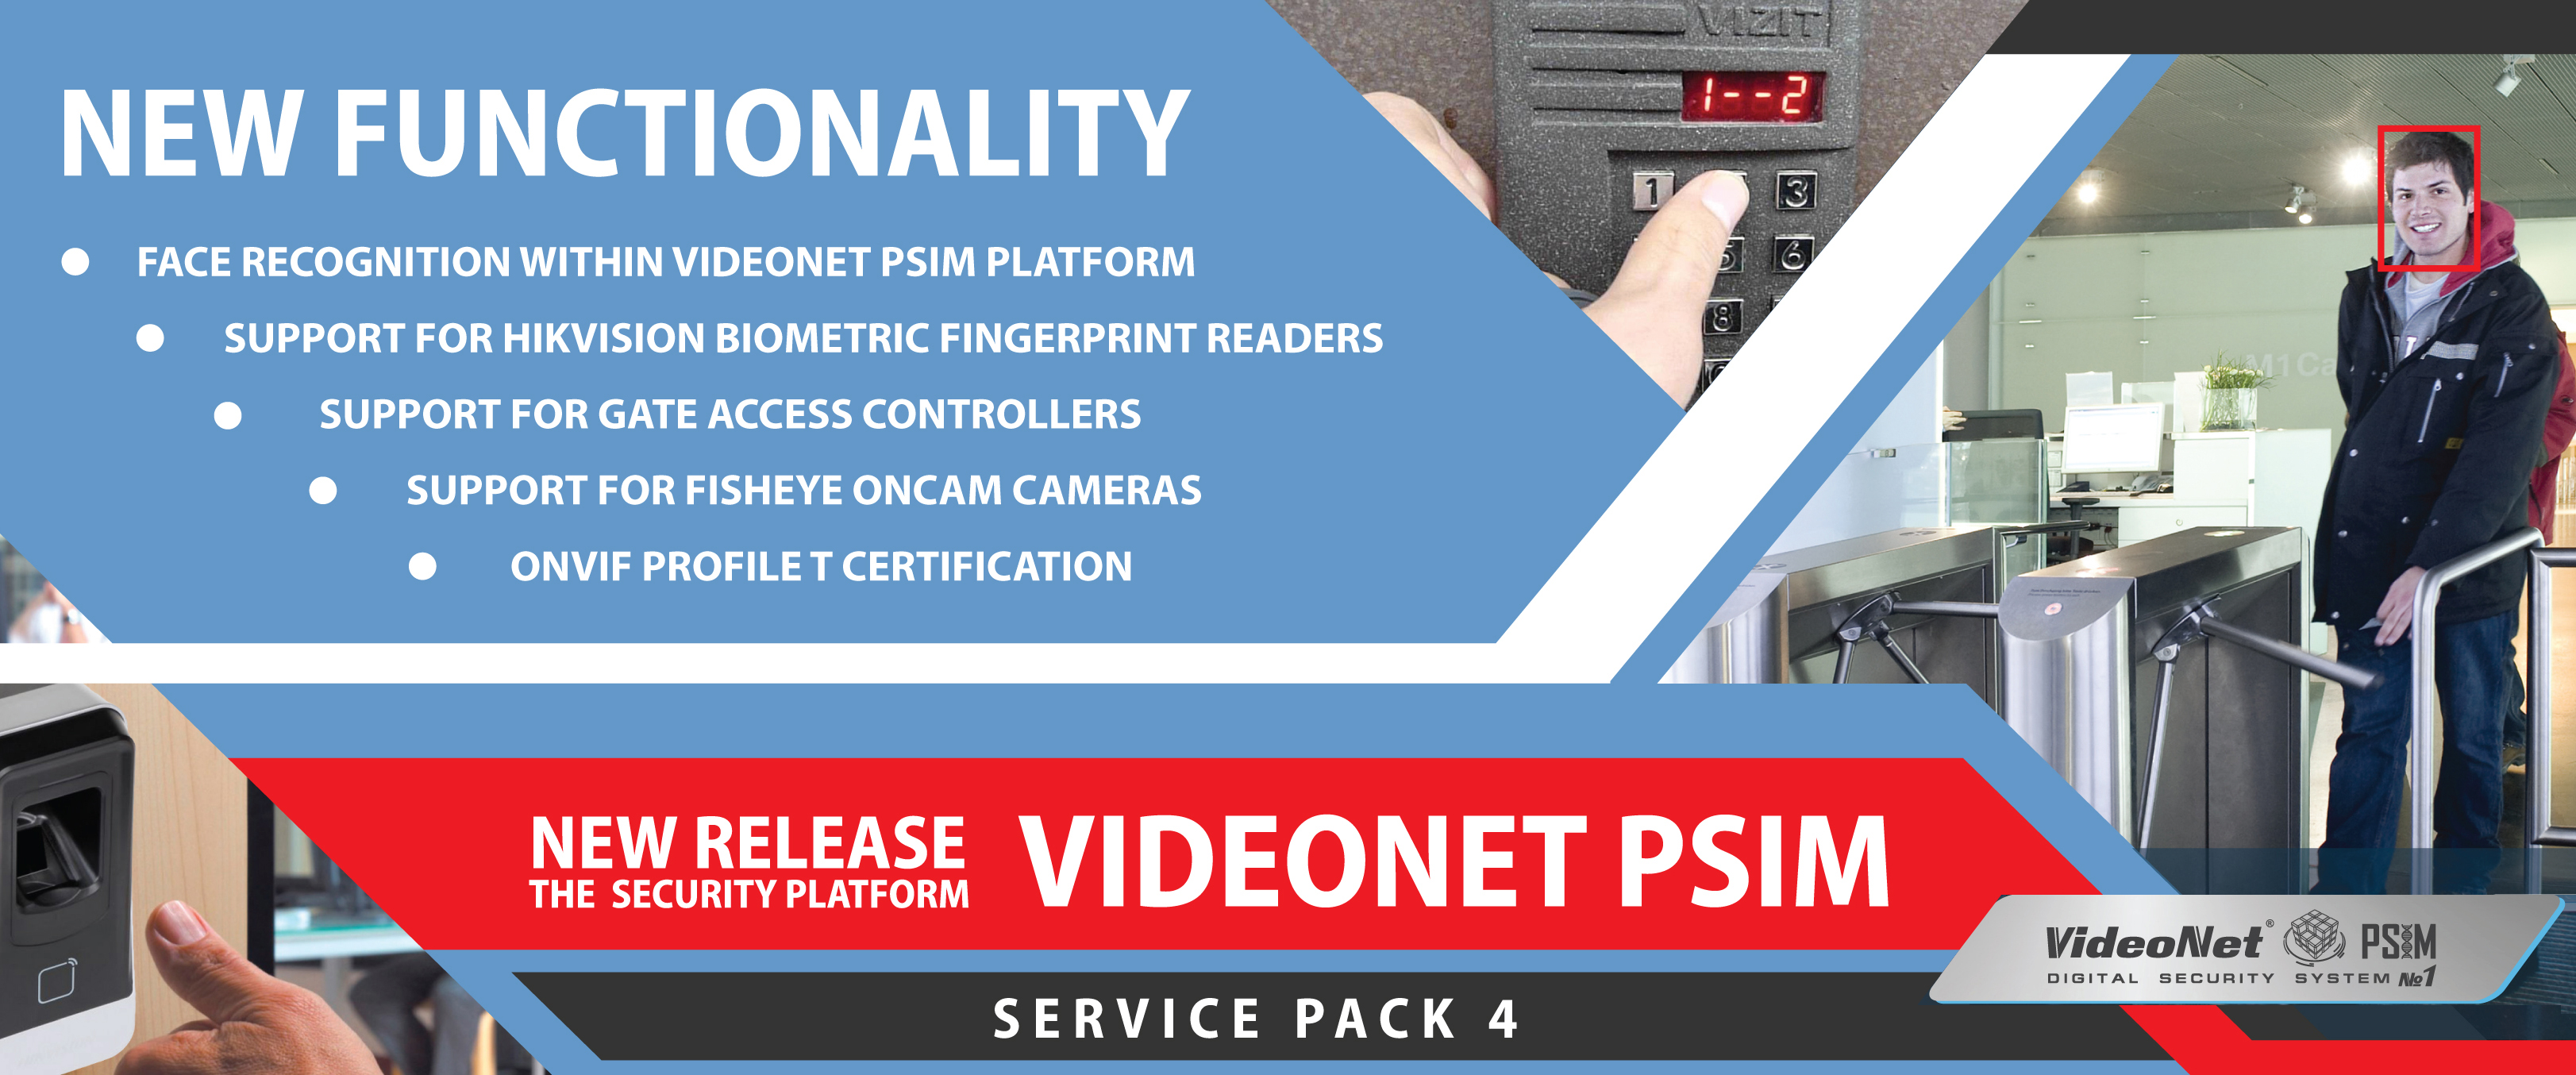 New release of VideoNet PSIM SP4 security platform